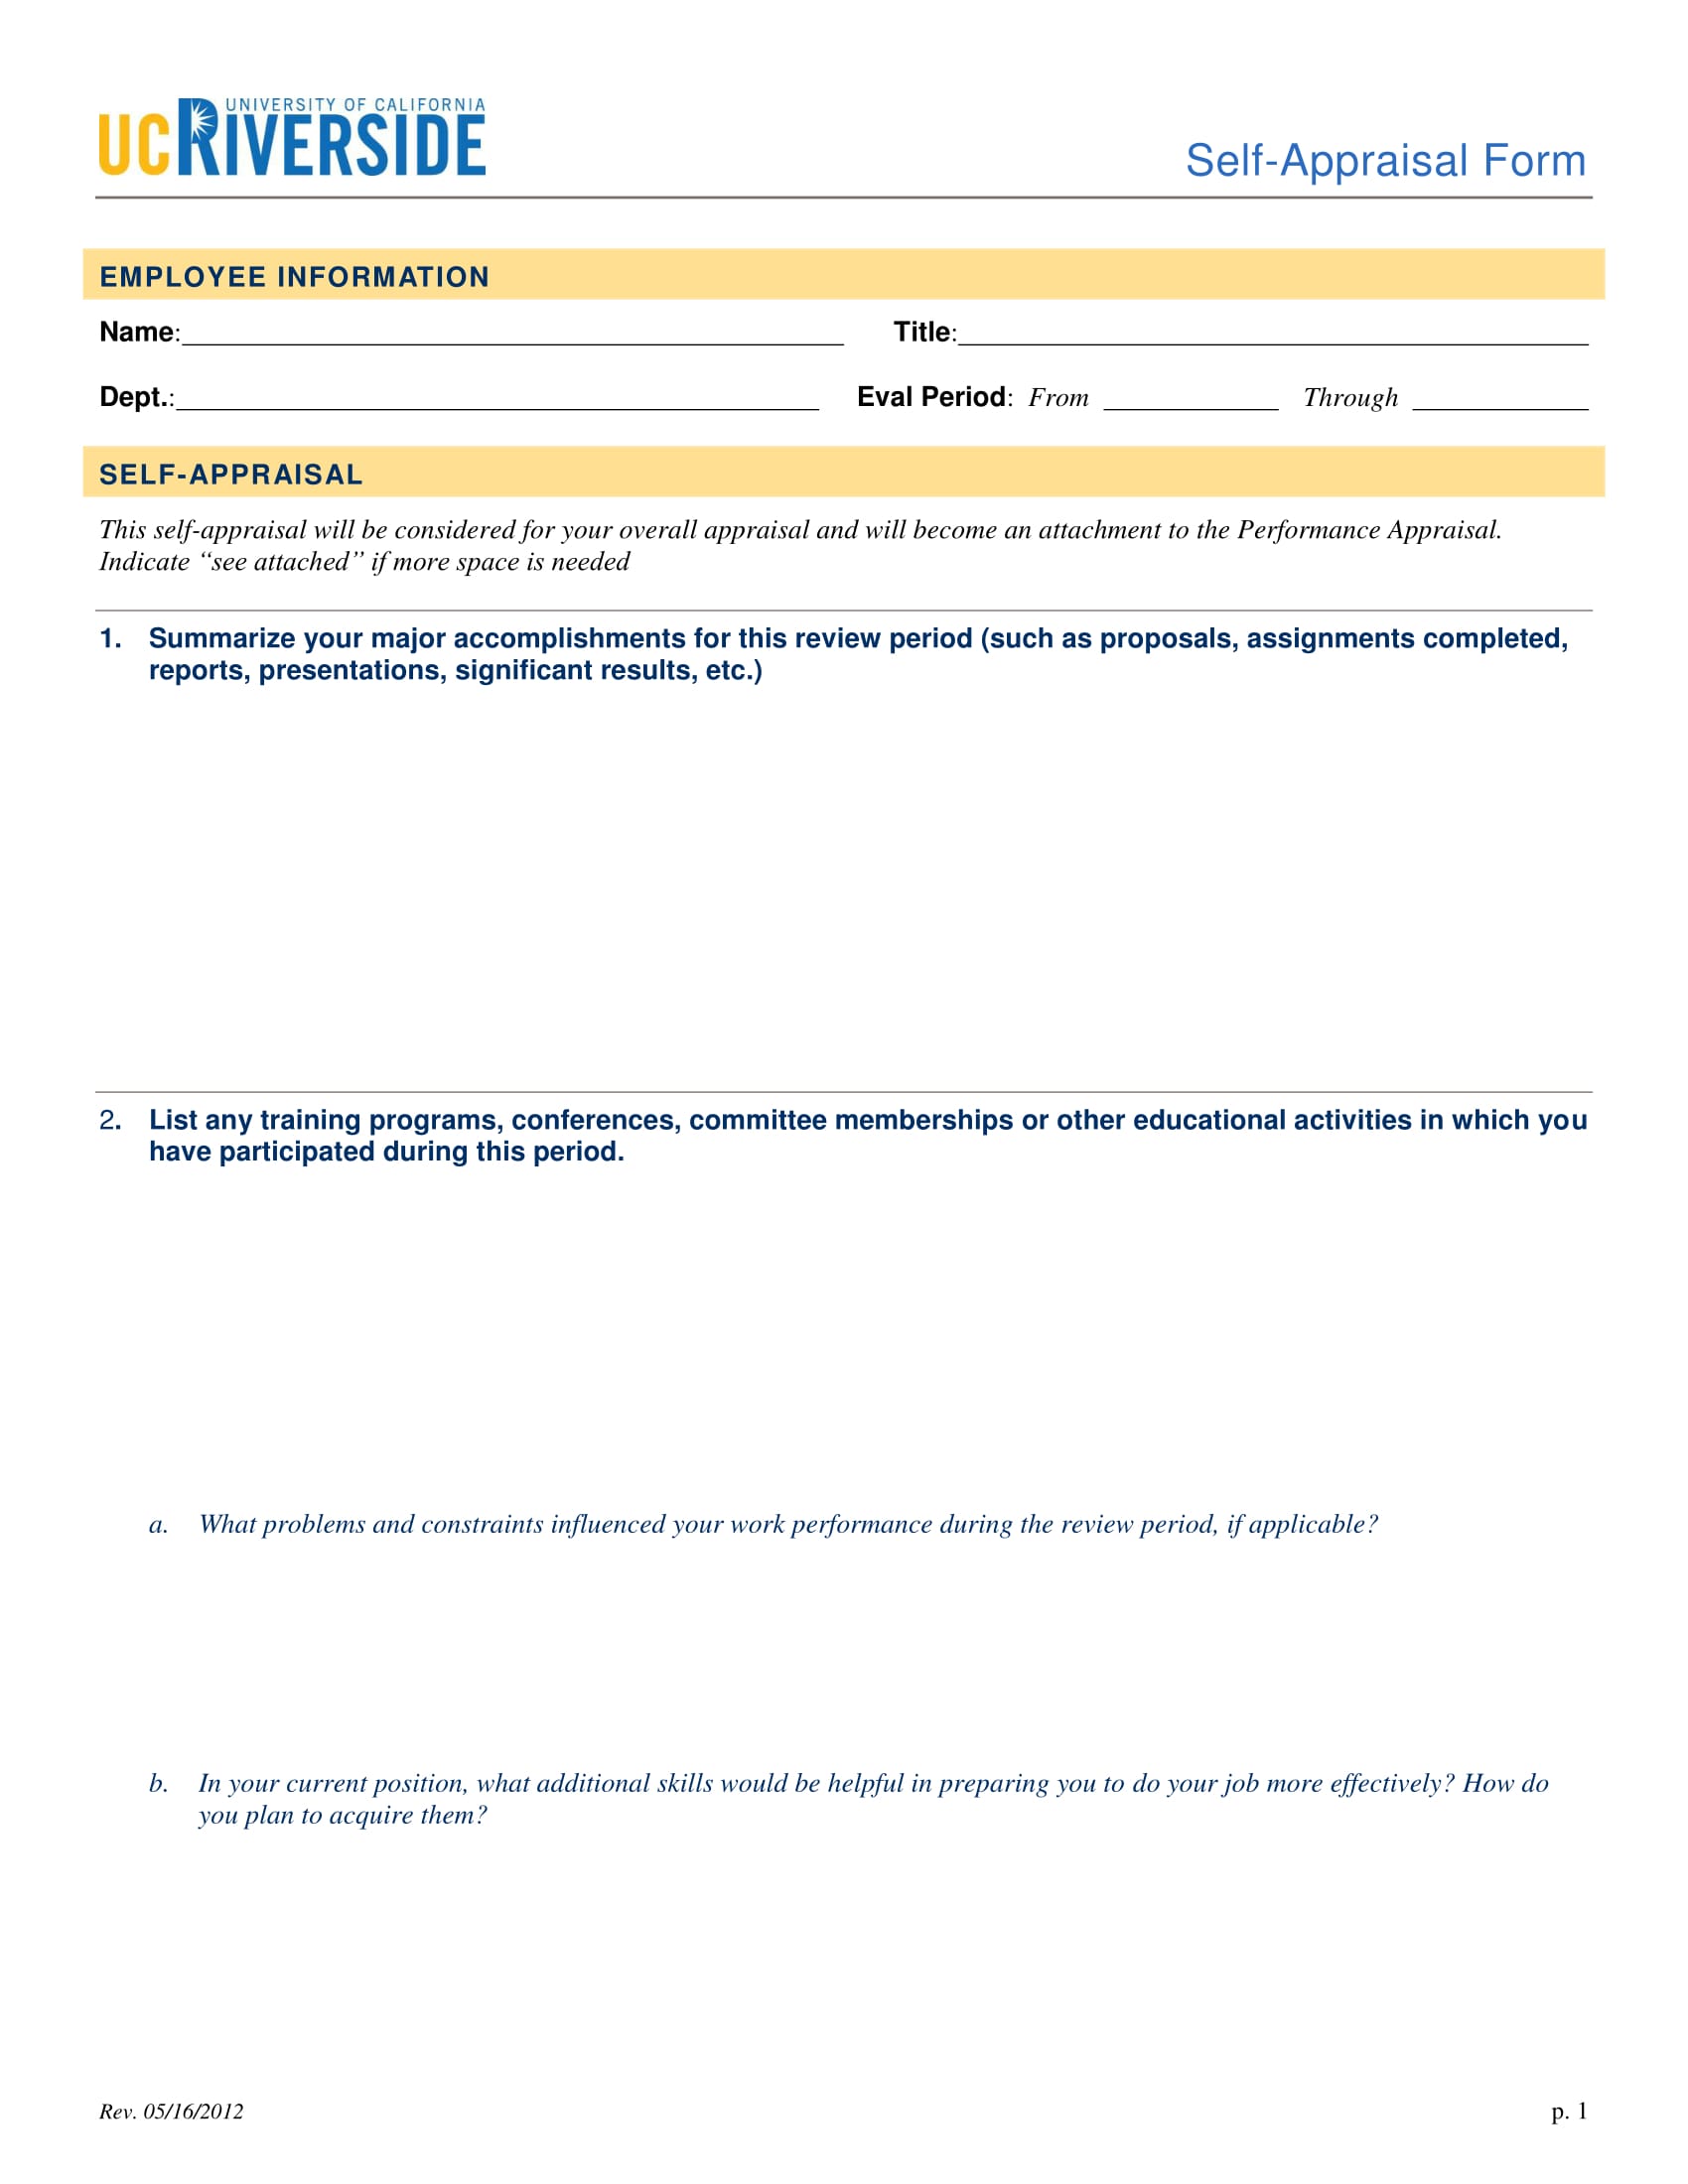 employee self appraisal form 1